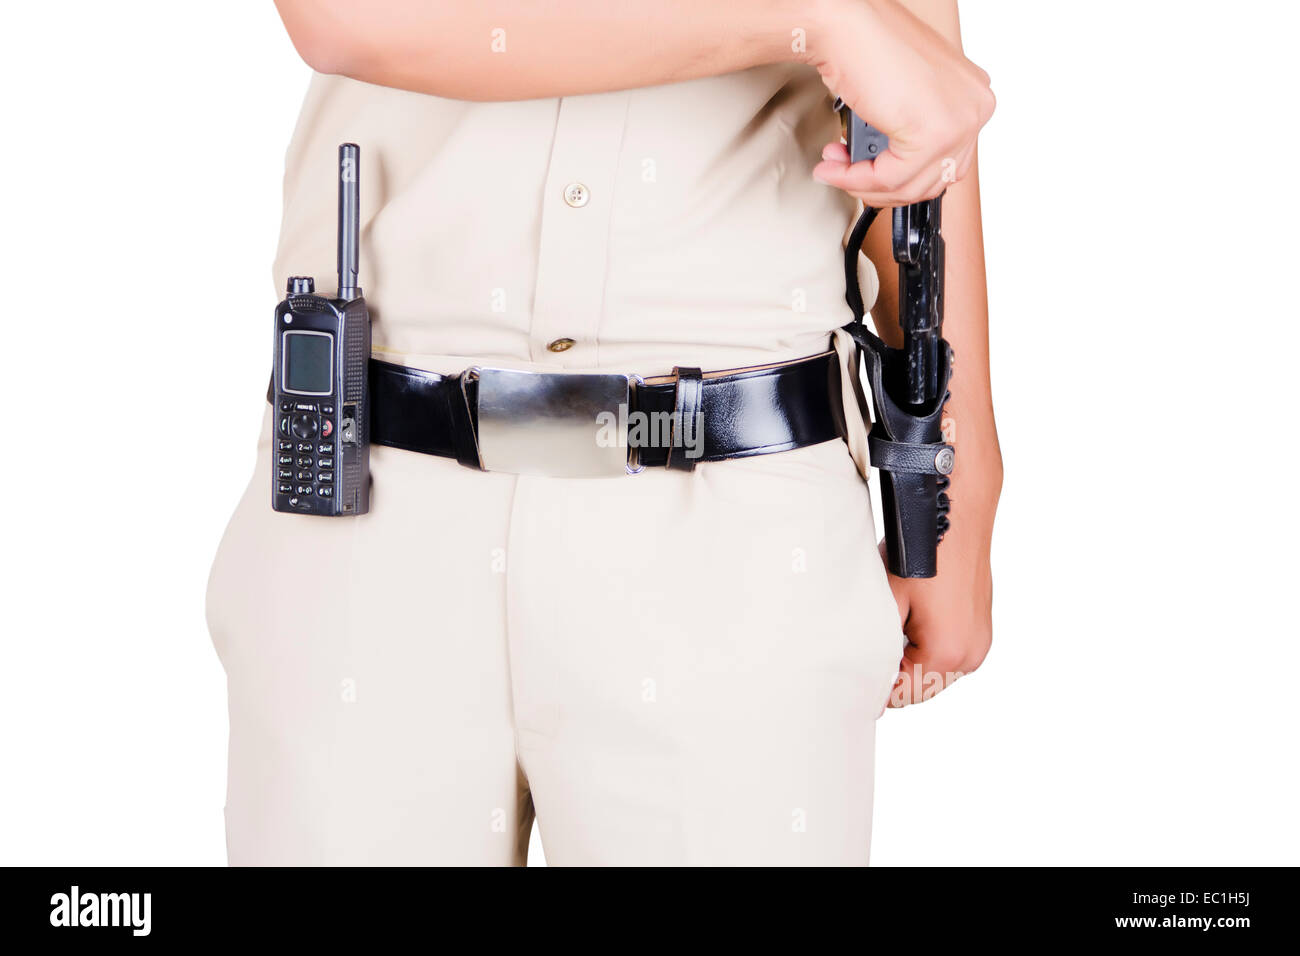 1 Indian Police man Officer holding Gun Crime Control Stock Photo